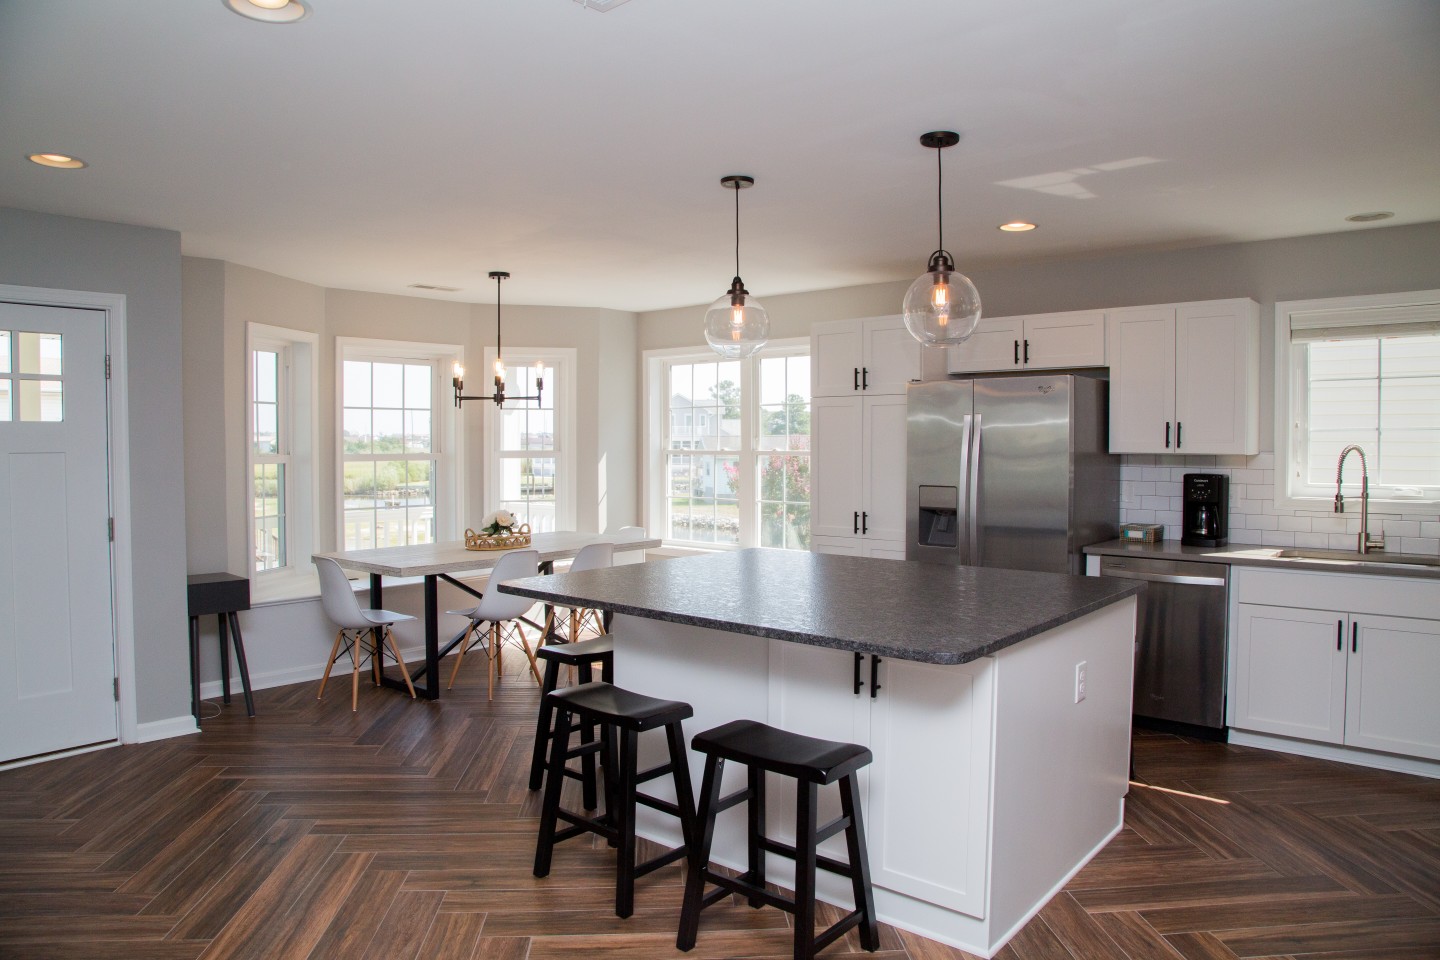 Kitchen with White Cabinets, Center Isle, Dark Granite Countertop and Pendant Lighting